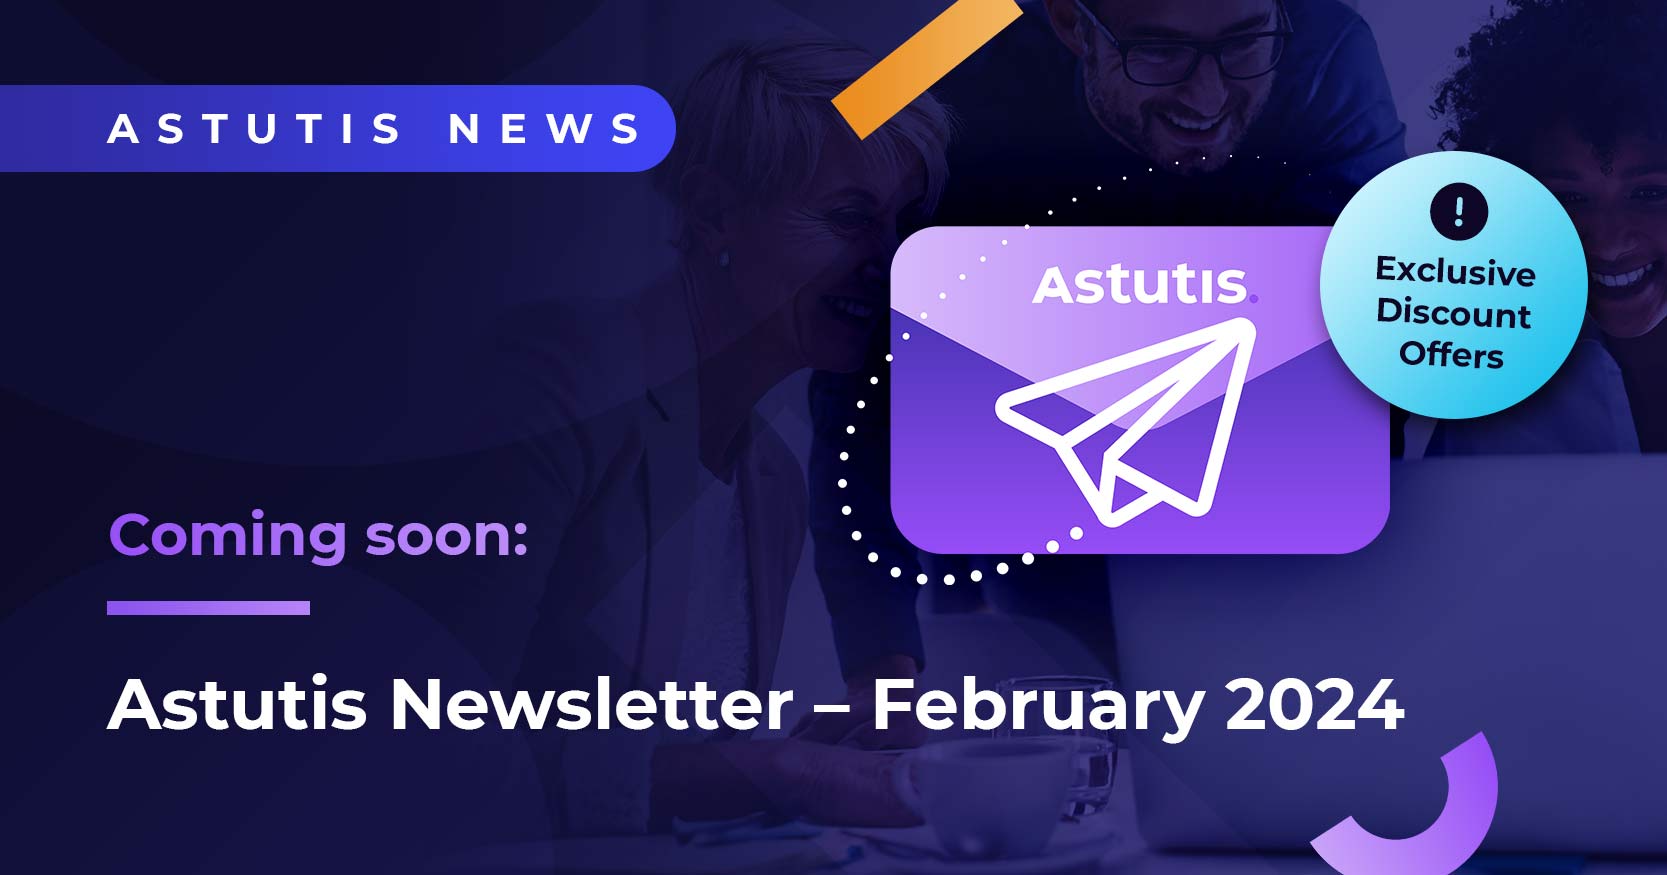 Coming Soon: Astutis Newsletter - February 2024 Image